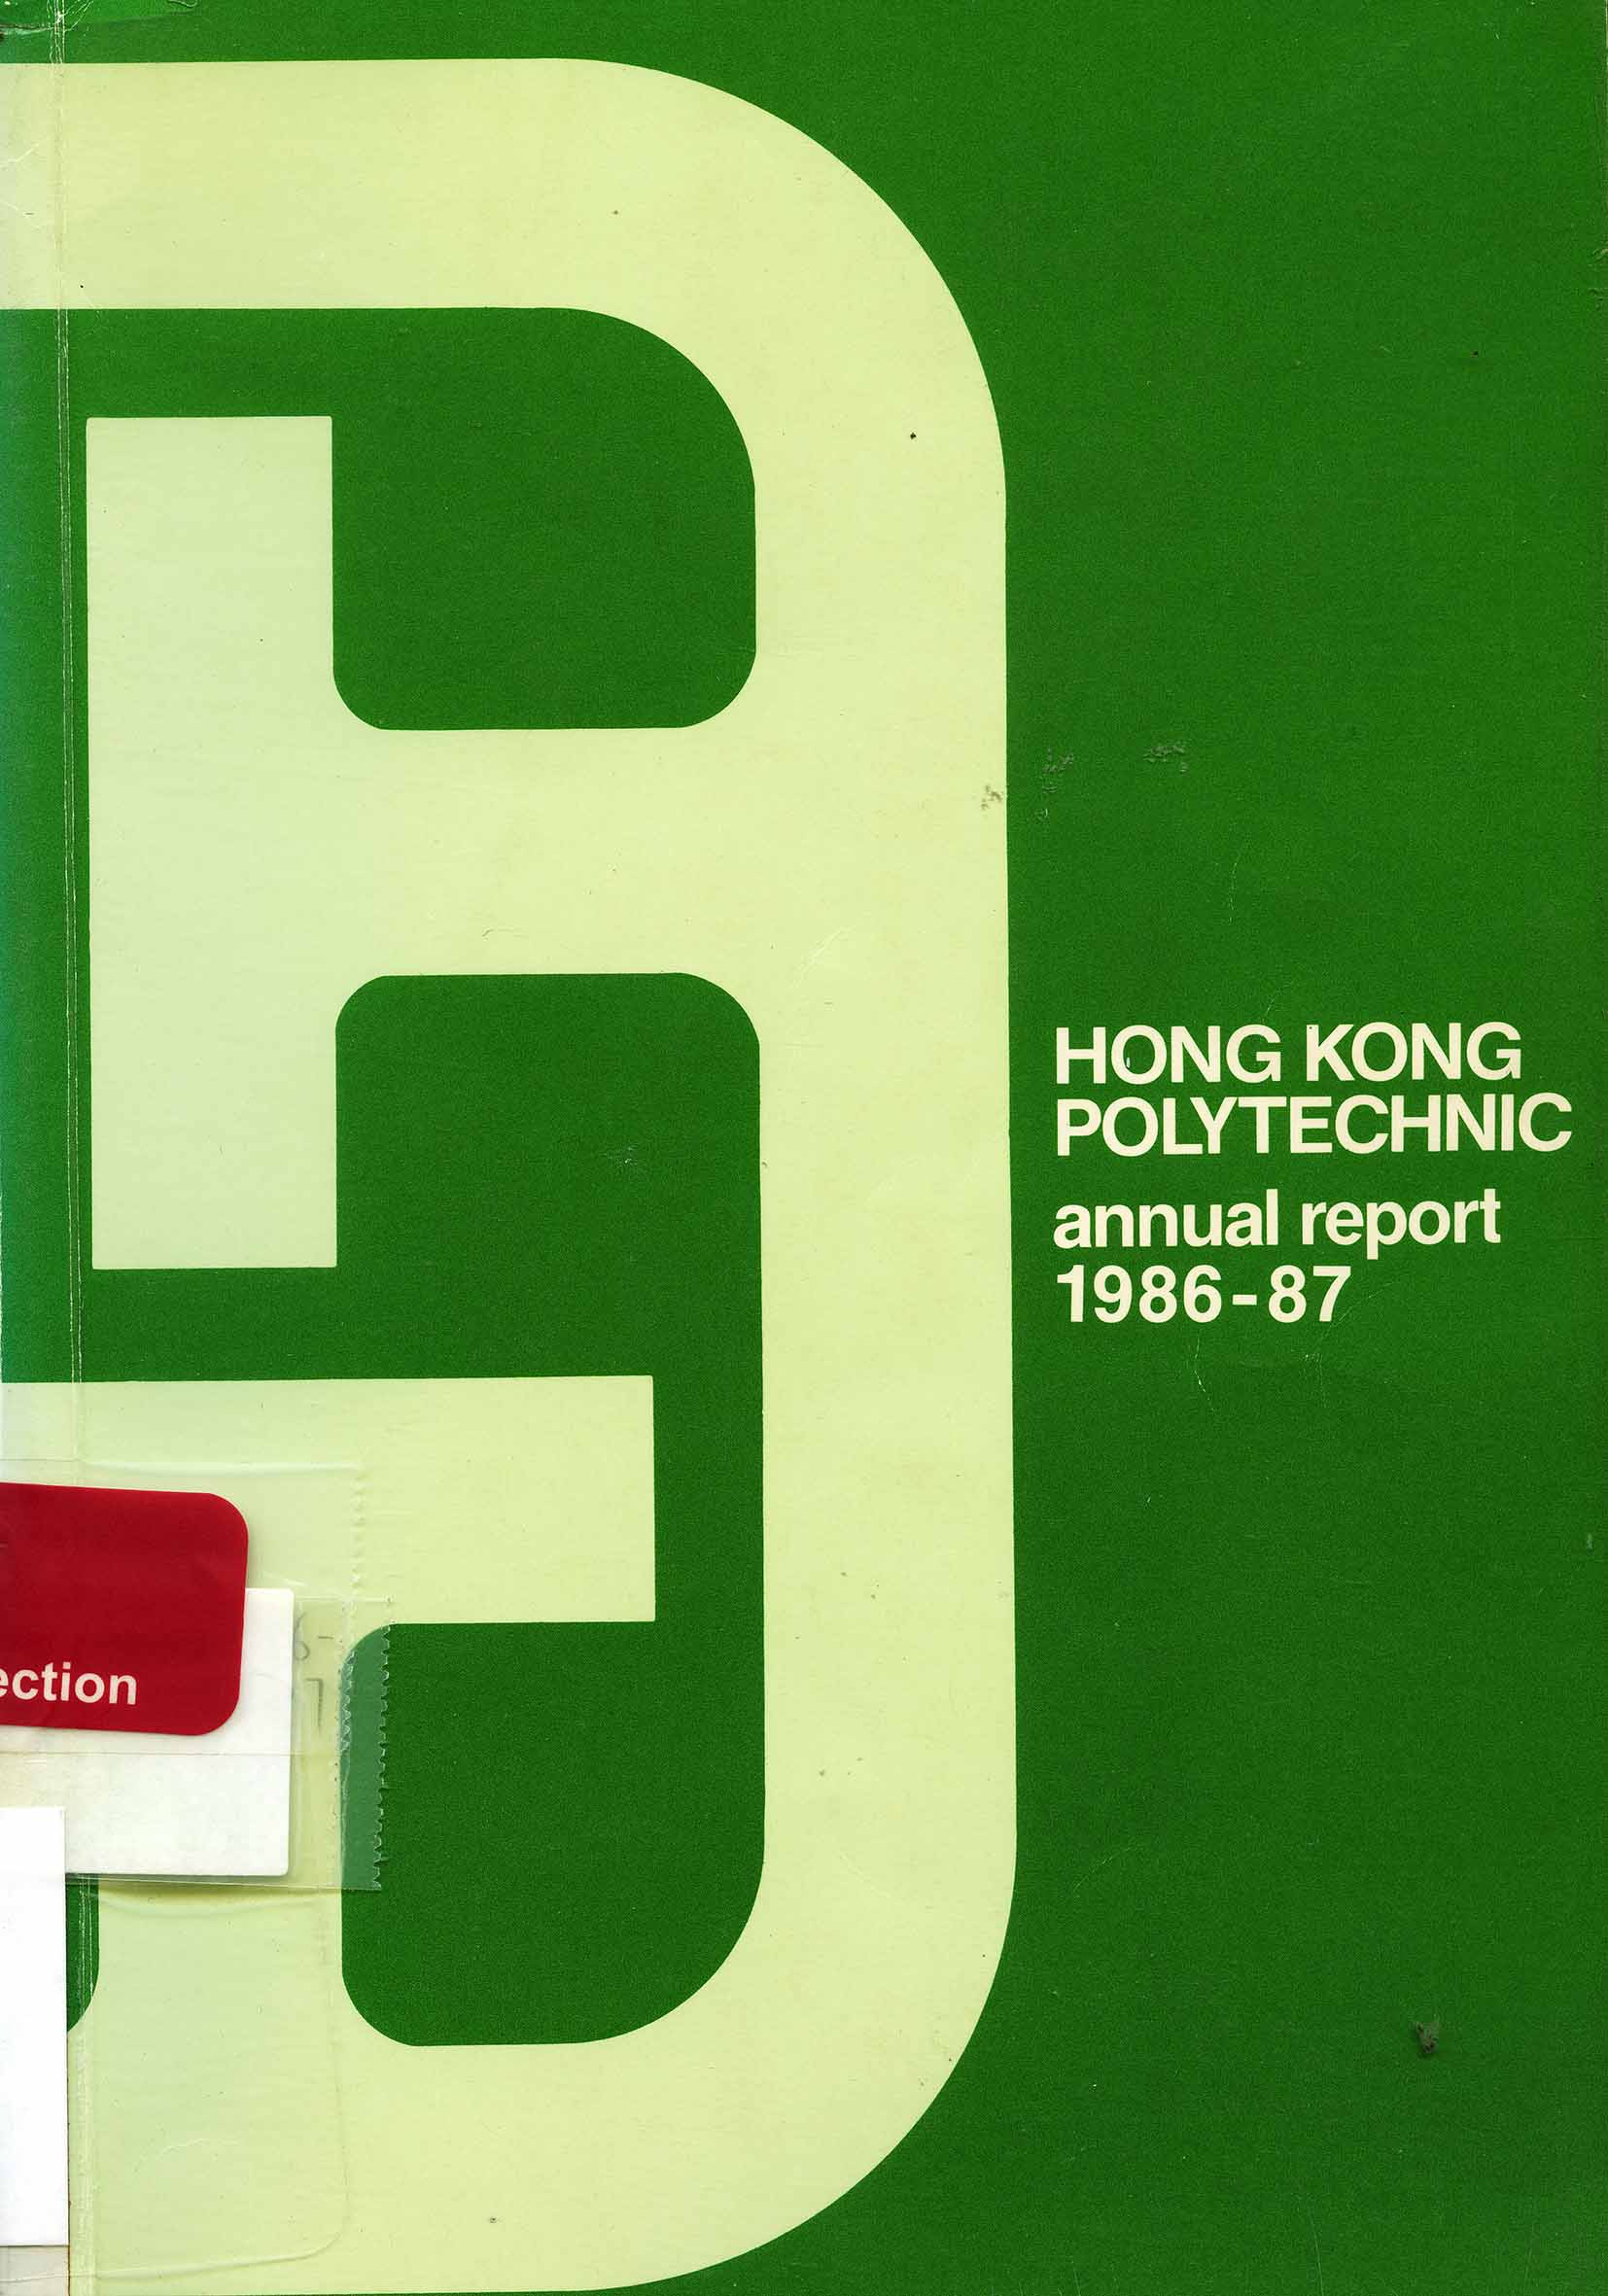 Hong Kong Polytechnic Annual Report 1986/87